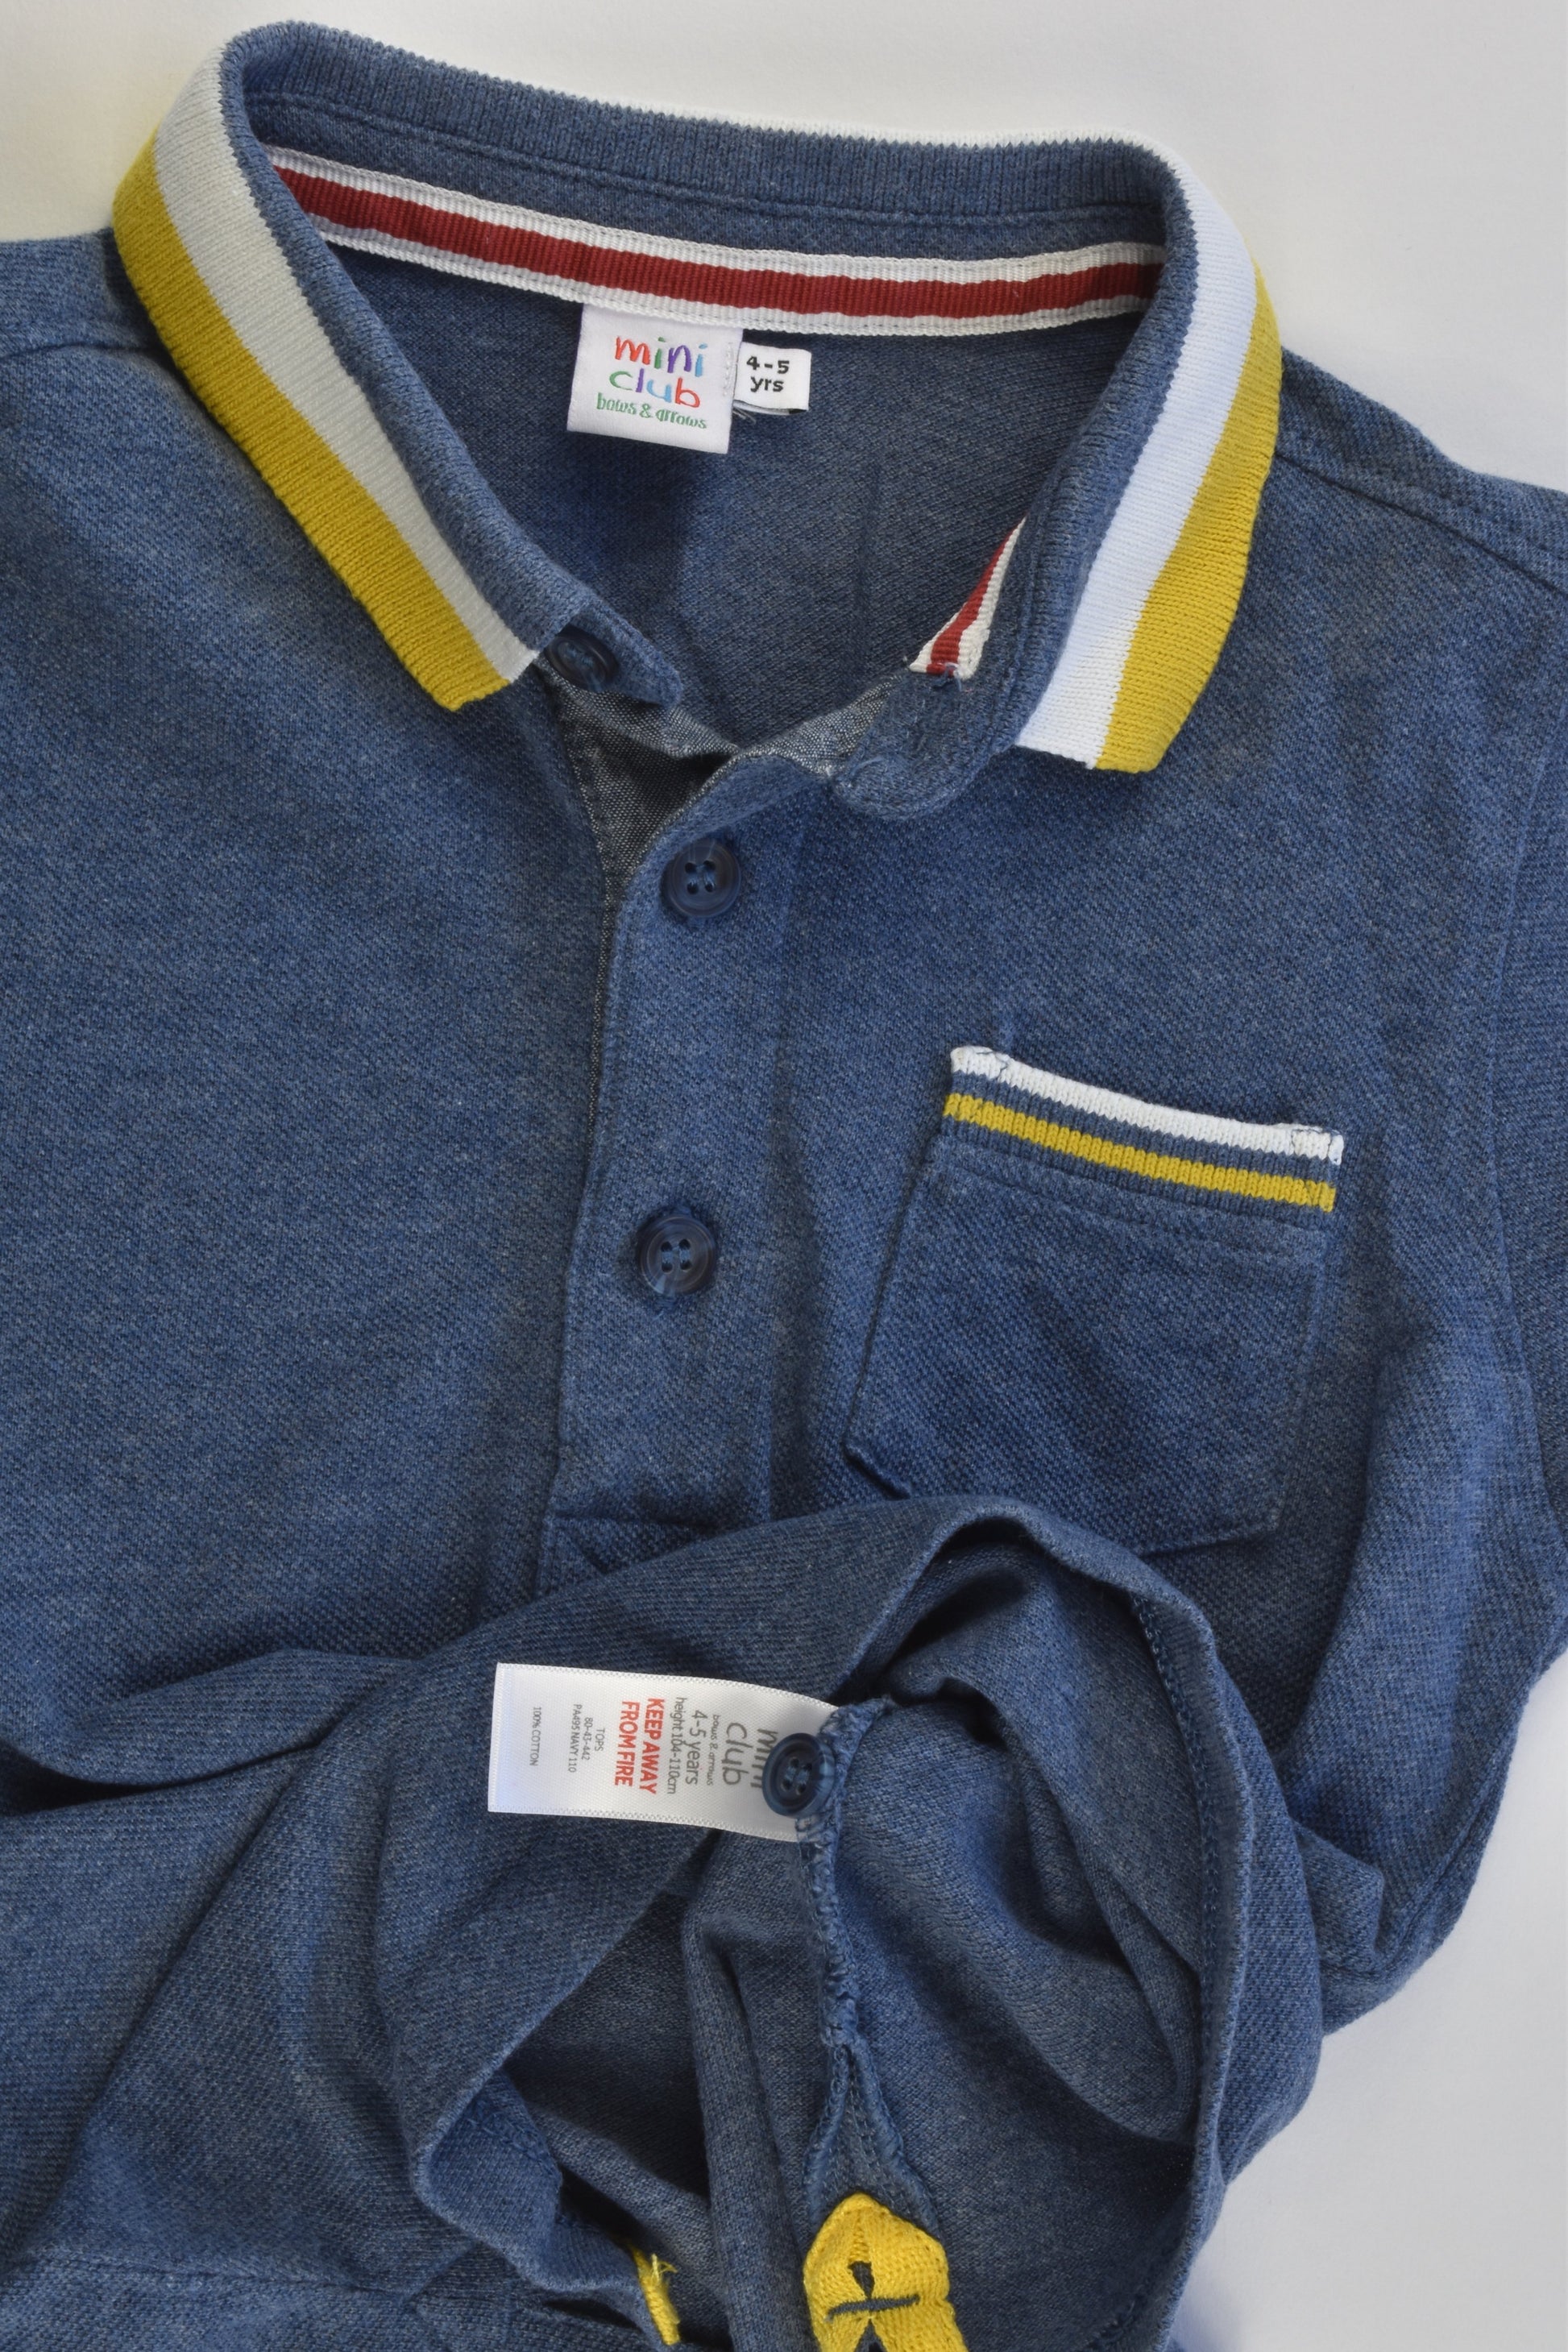 Mini Club Size 4-5 (104-110 cm) Collared Polo Shirt